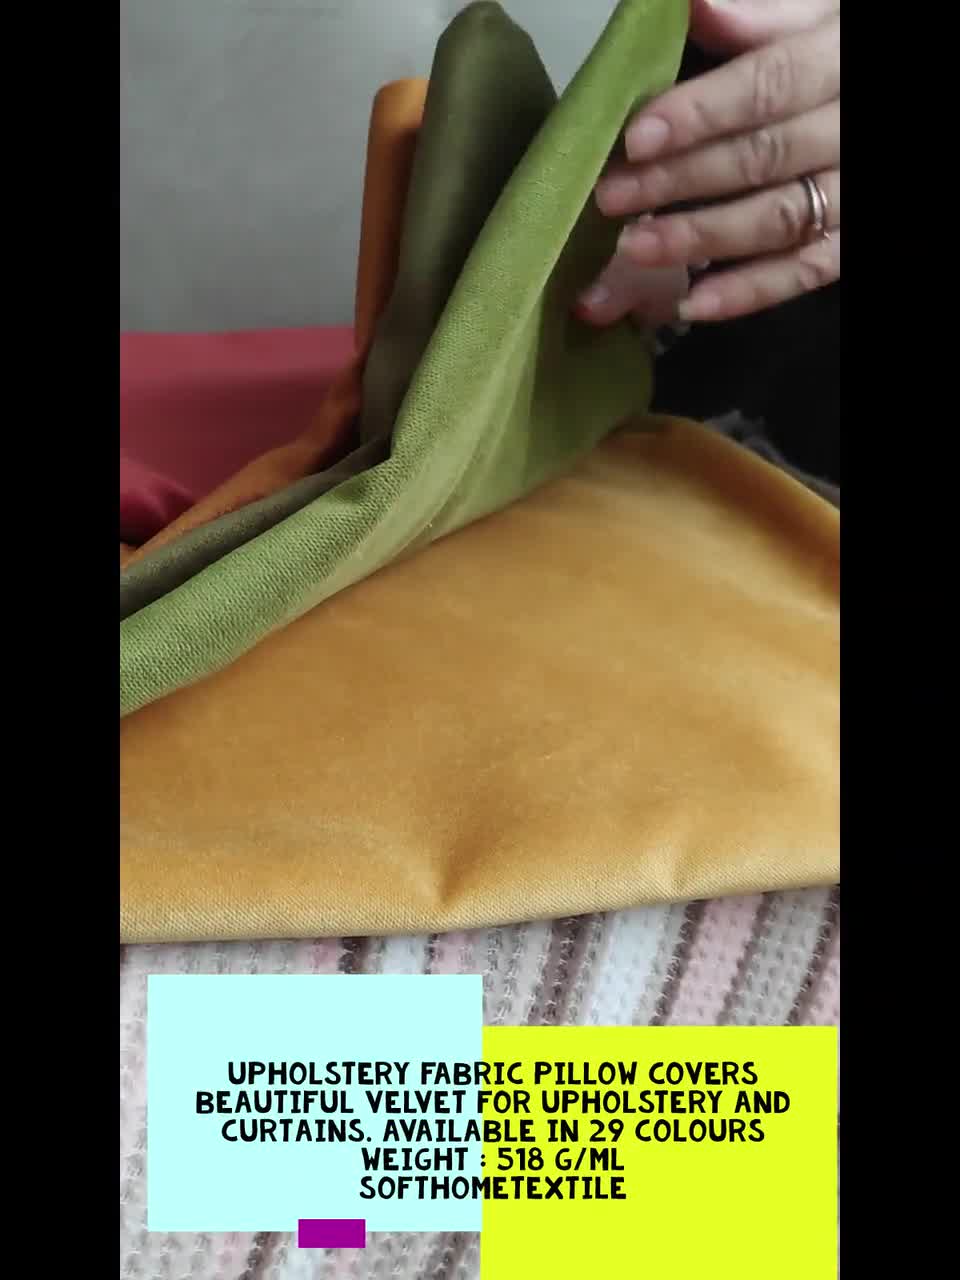 Velvet Extra Long Lumbar Pillow Cover 13x36 in Brown – Plankroad Home Decor